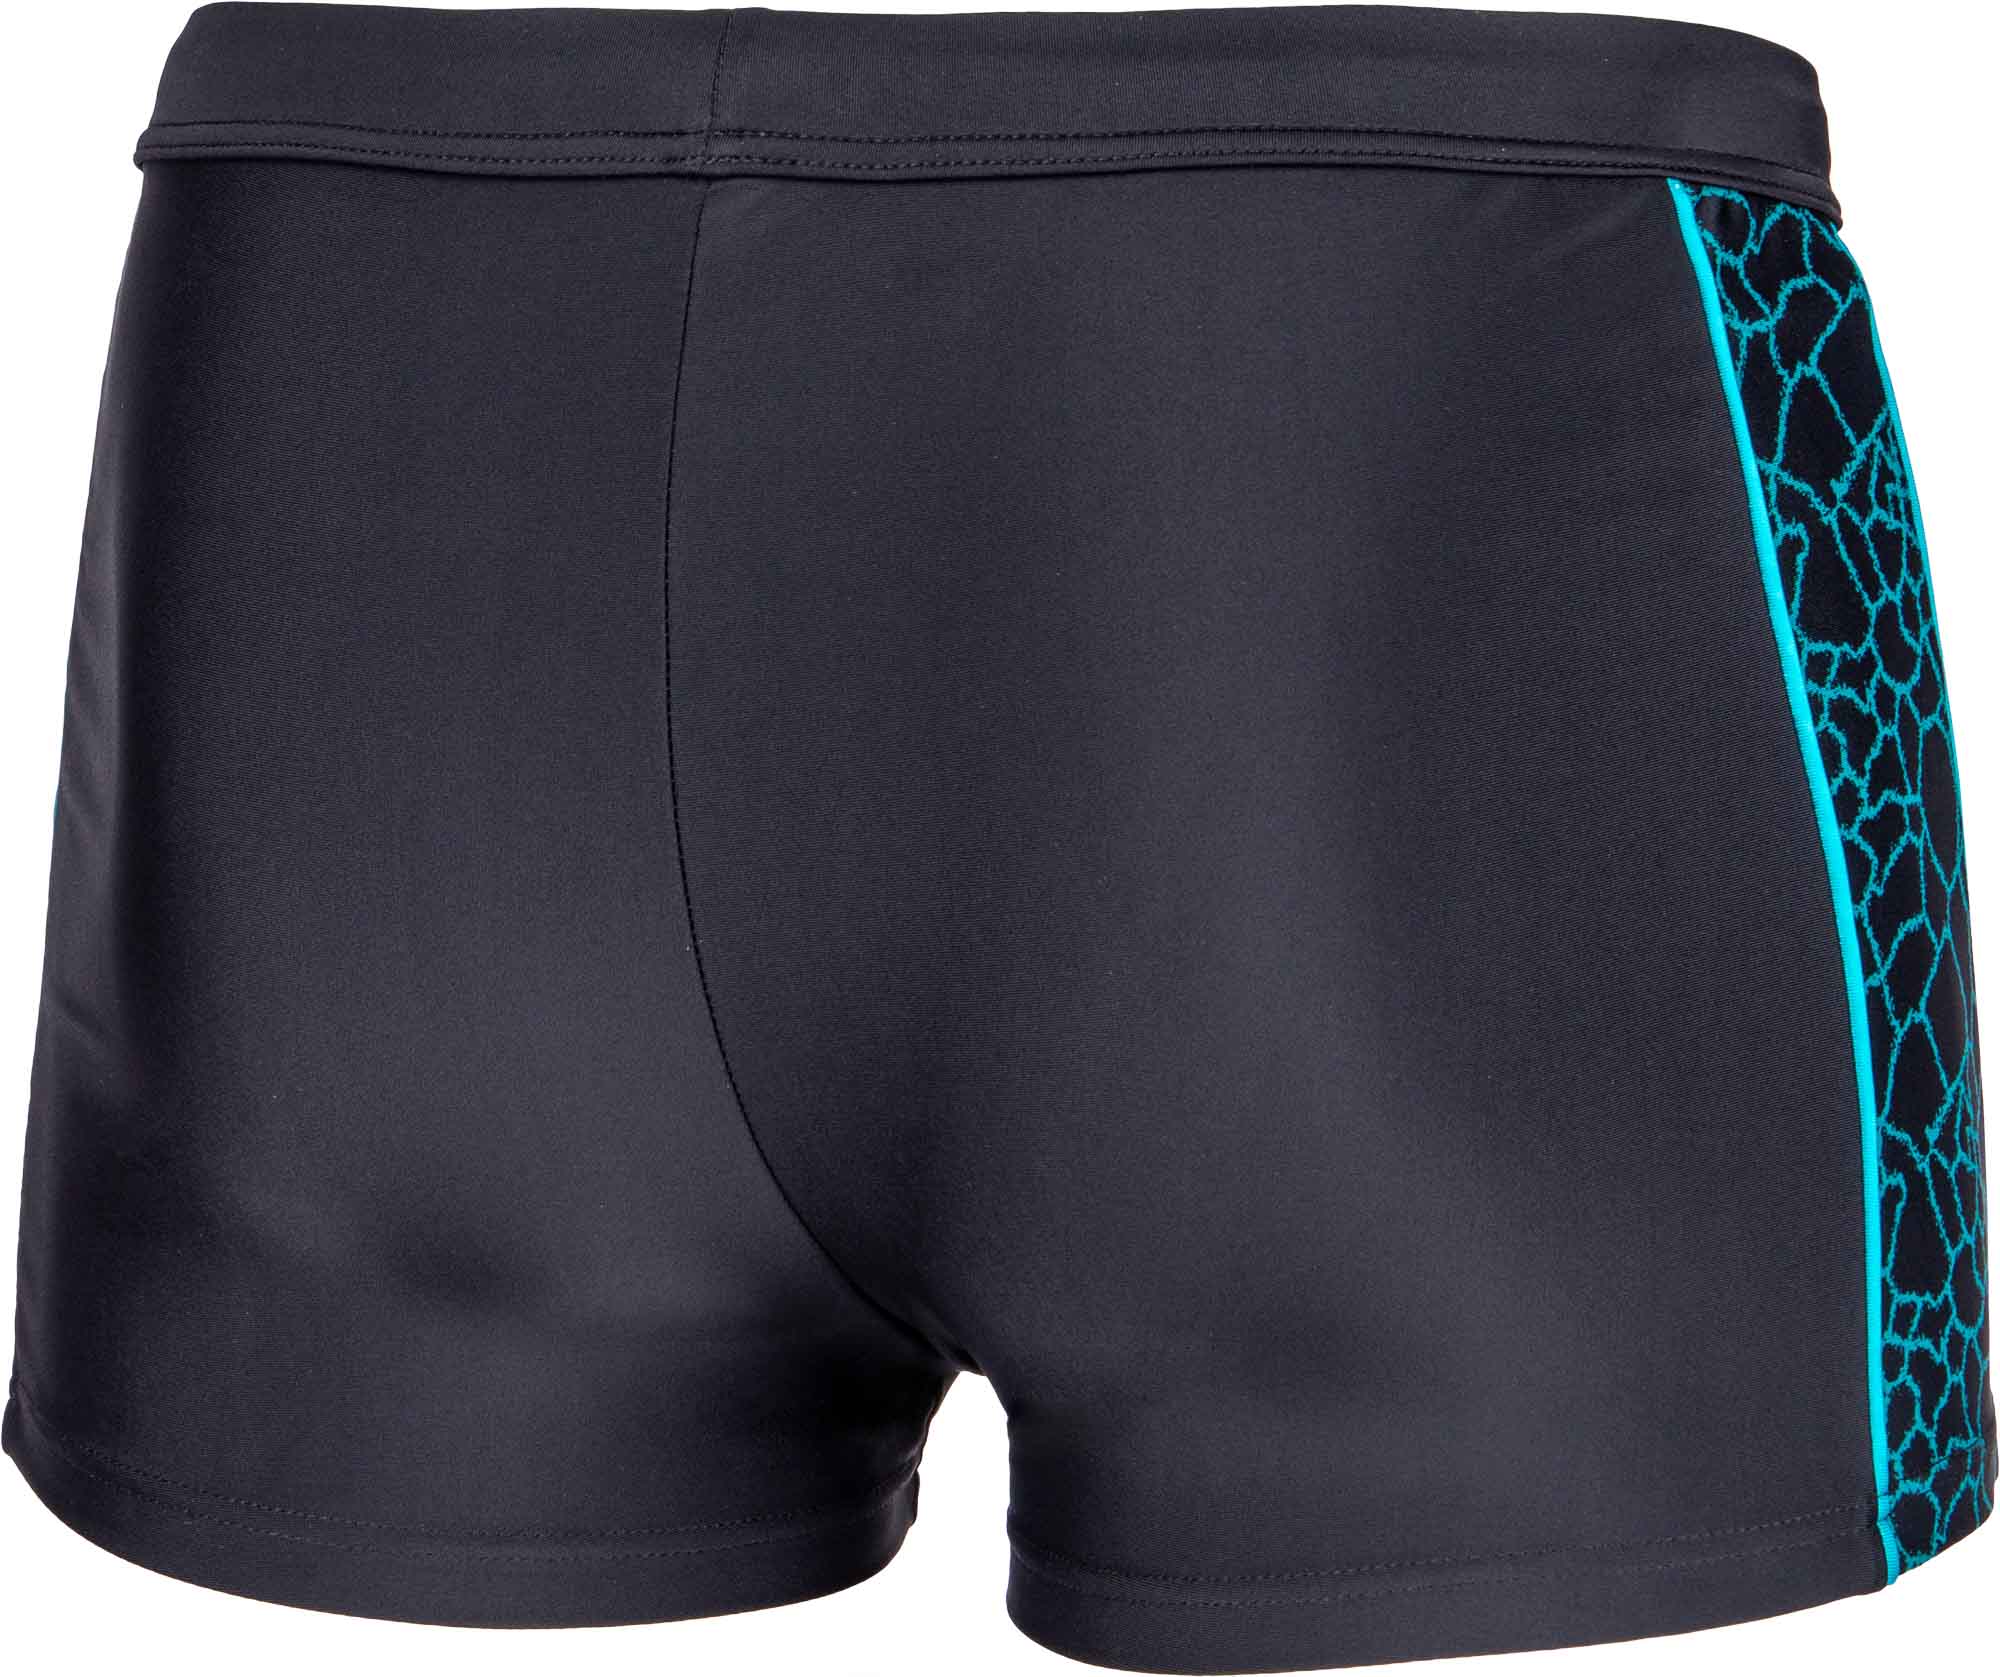 Men’s swim shorts